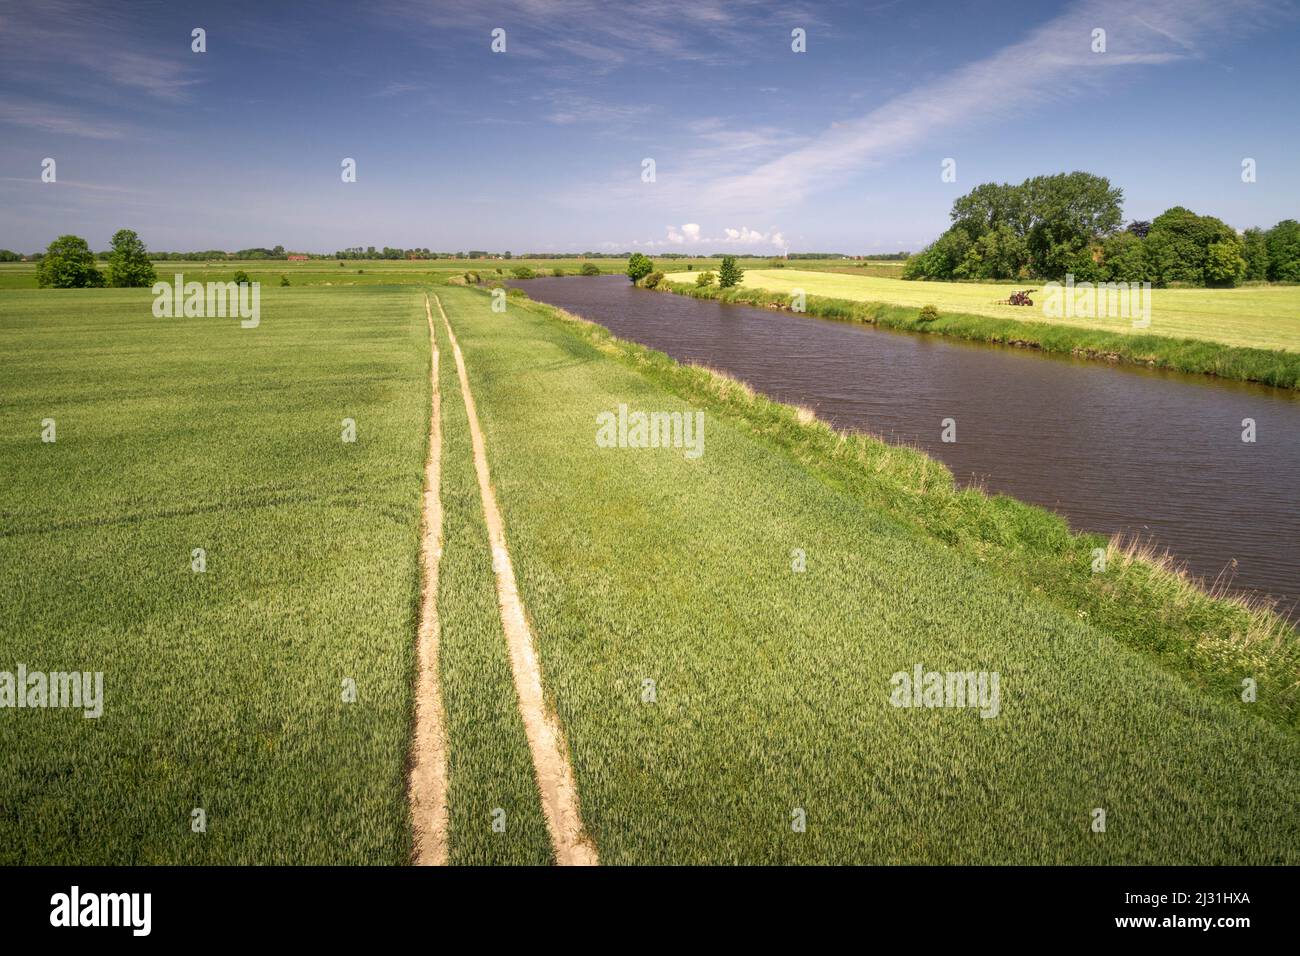 Fields at Crildumer Tief, Wangerland, Friesland, Lower Saxony, Germany, Europe Stock Photo